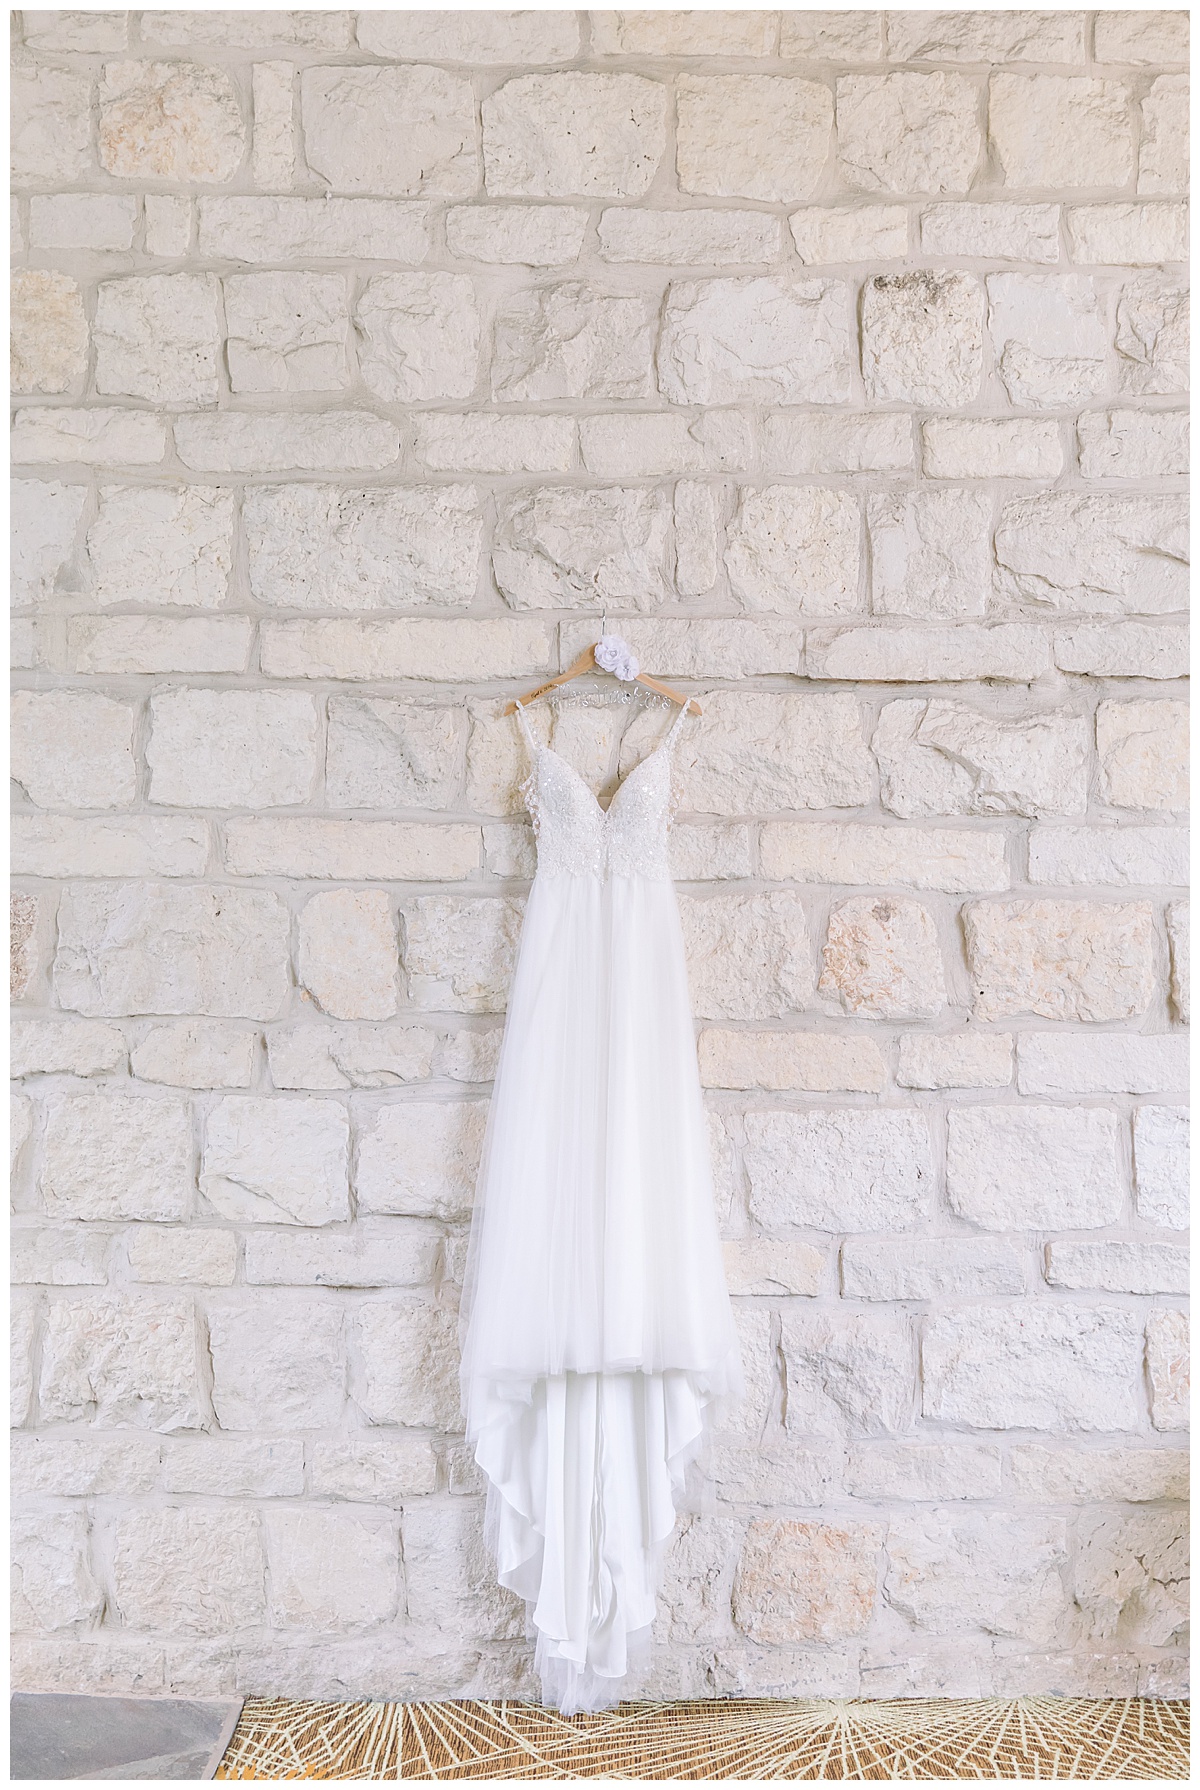 Wedding gown against stone wall at Hyatt Regency Hill Country Resort Wedding in San Antonio, TX | San Antonio Wedding photographer| Destination Wedding Photographer| Monica Roberts Photography | monicaroberts.com